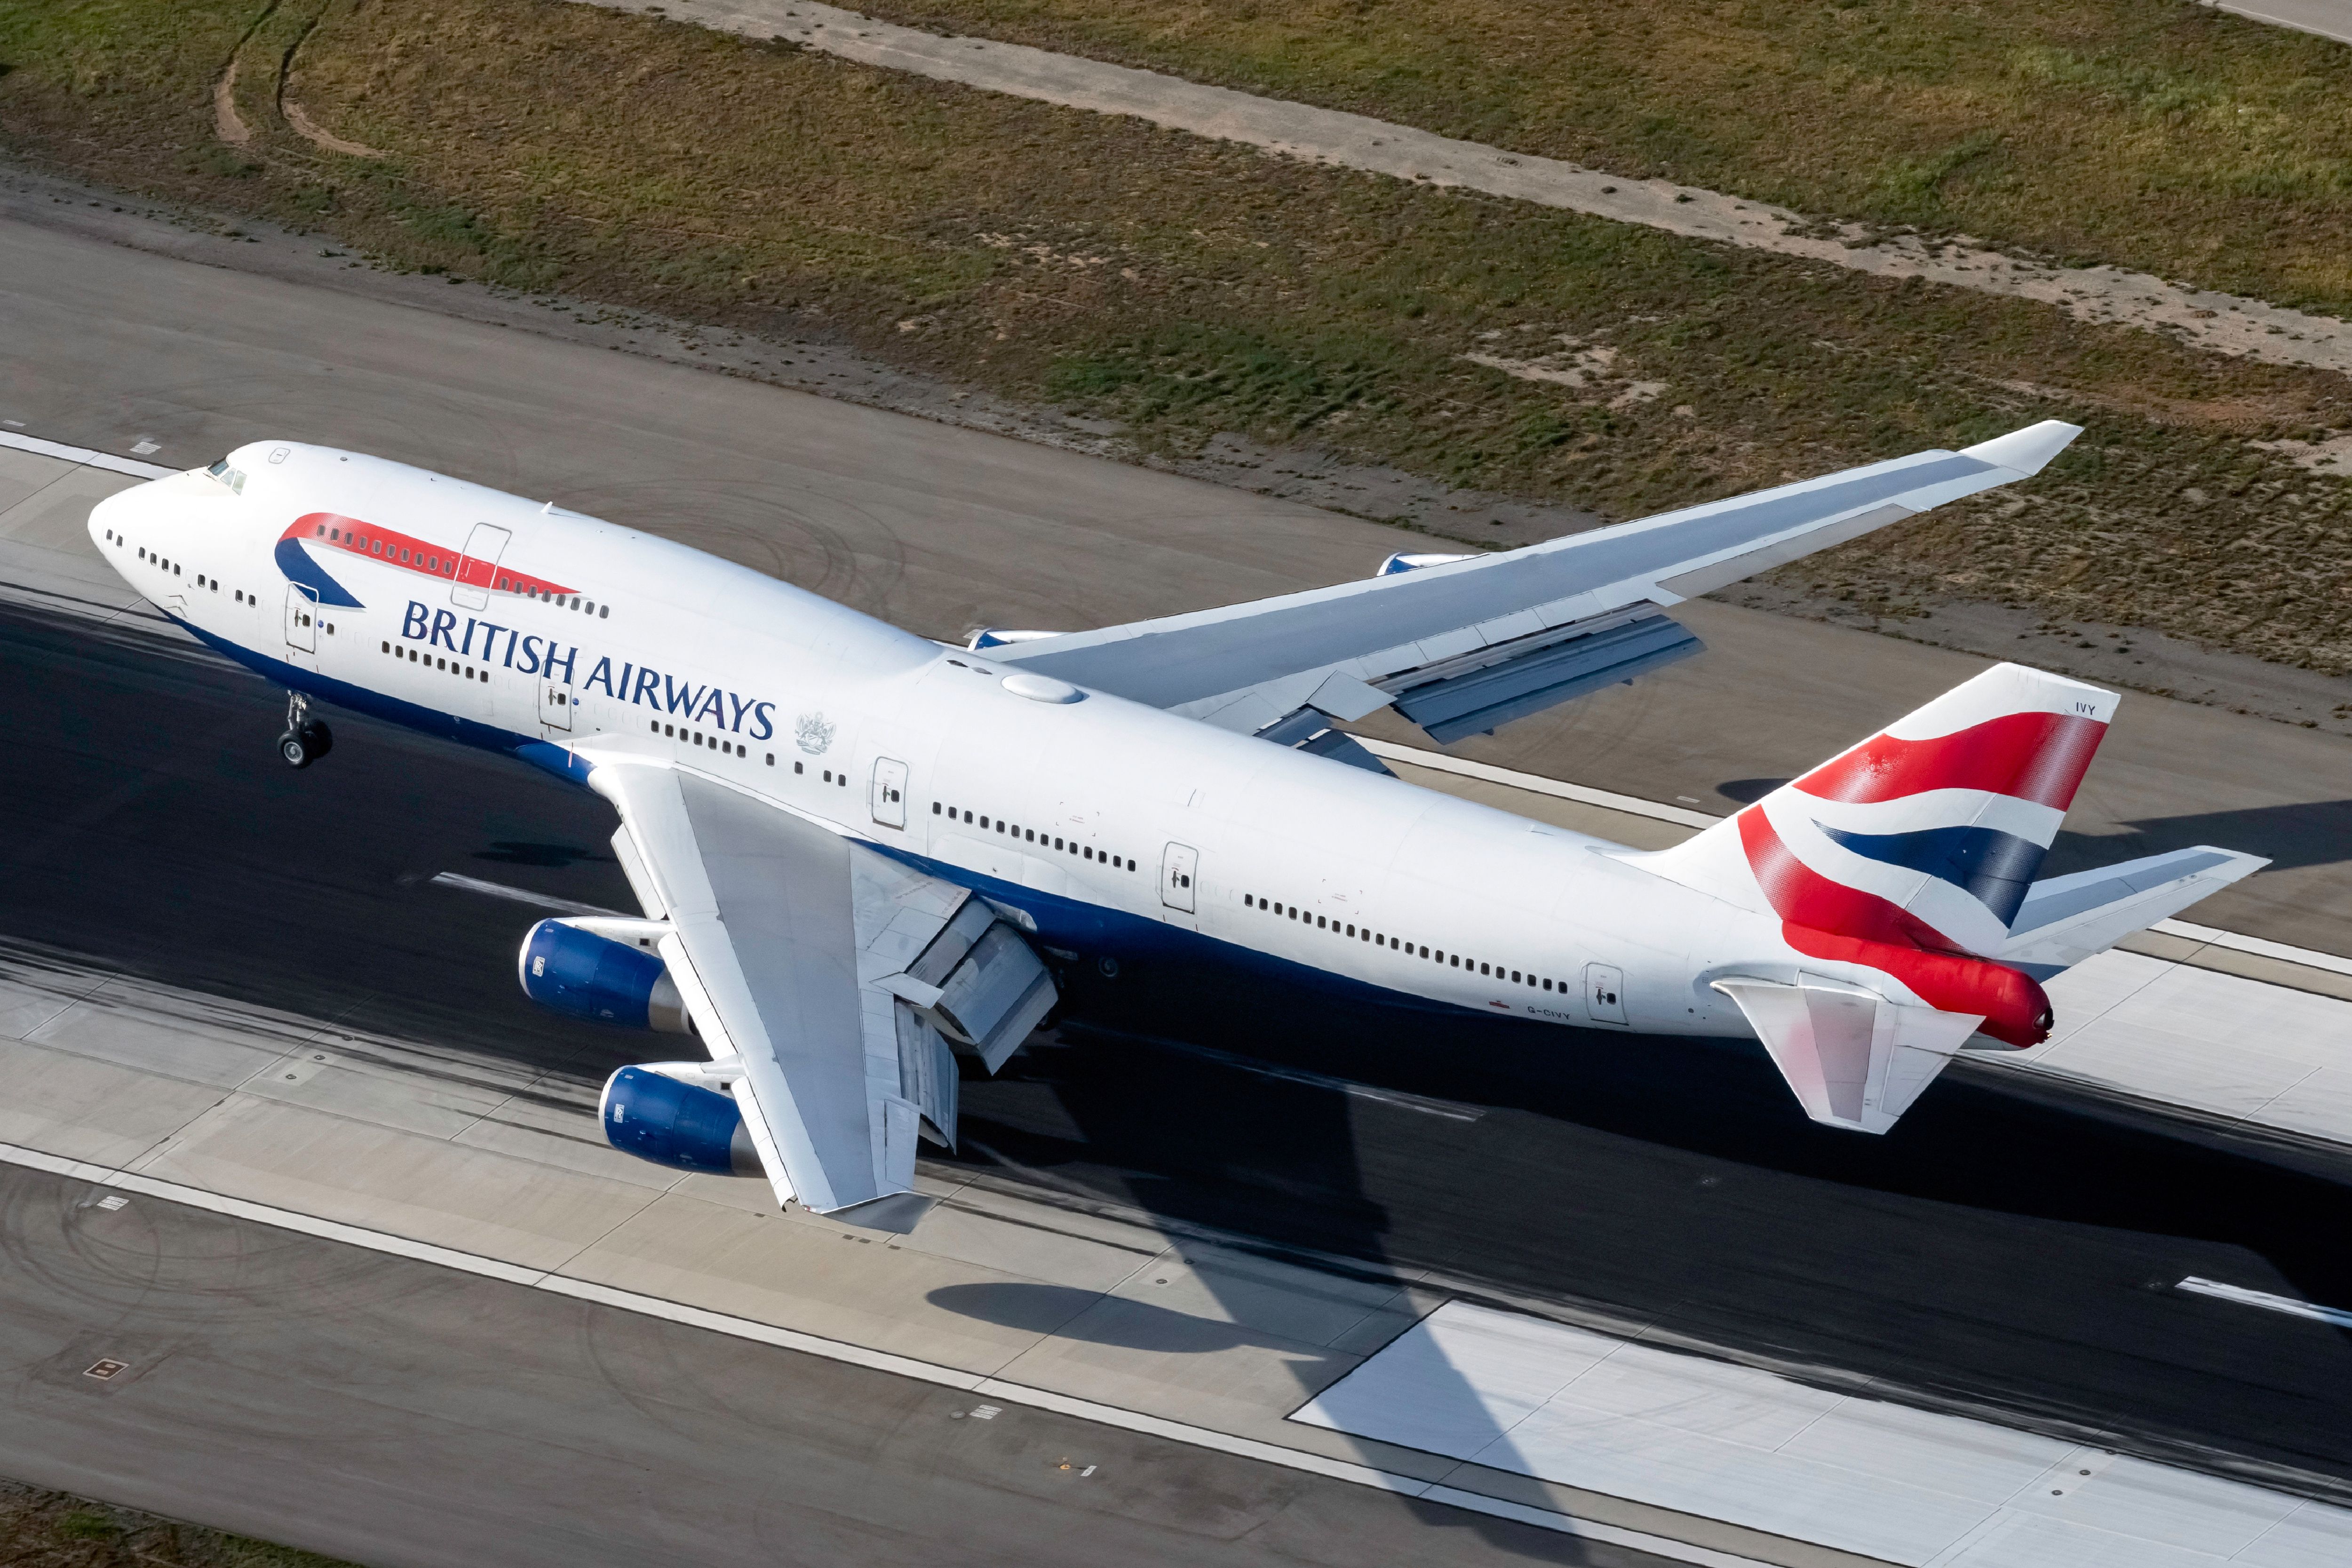 British Airways Boeing 747-400 landing at Los Angeles International Airport.